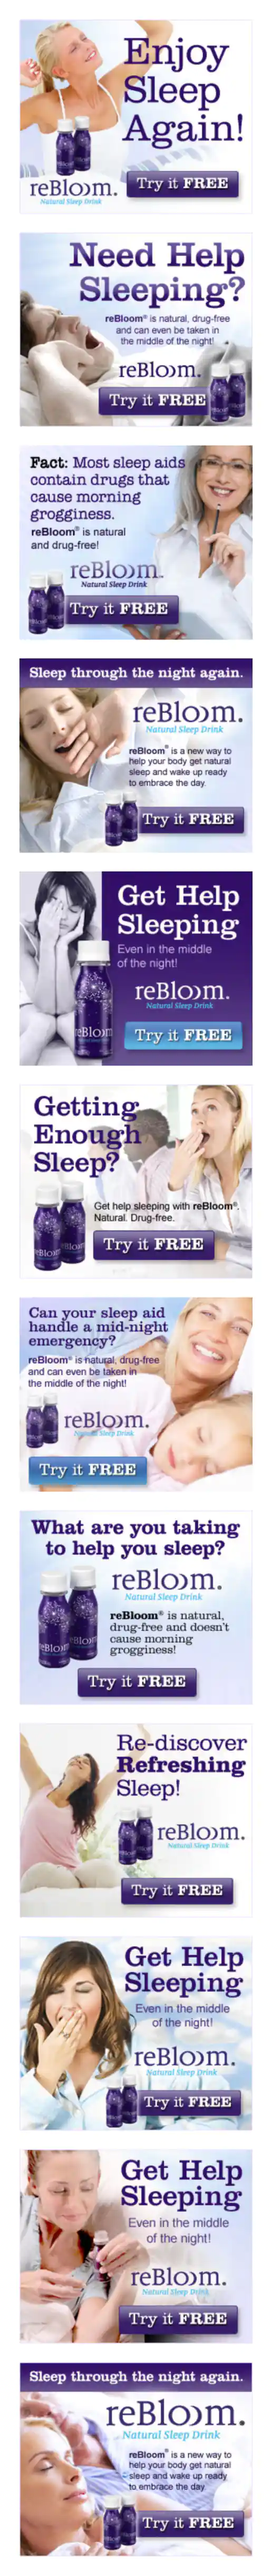 Rebloom.com Banner Ads – 12 Versions project image